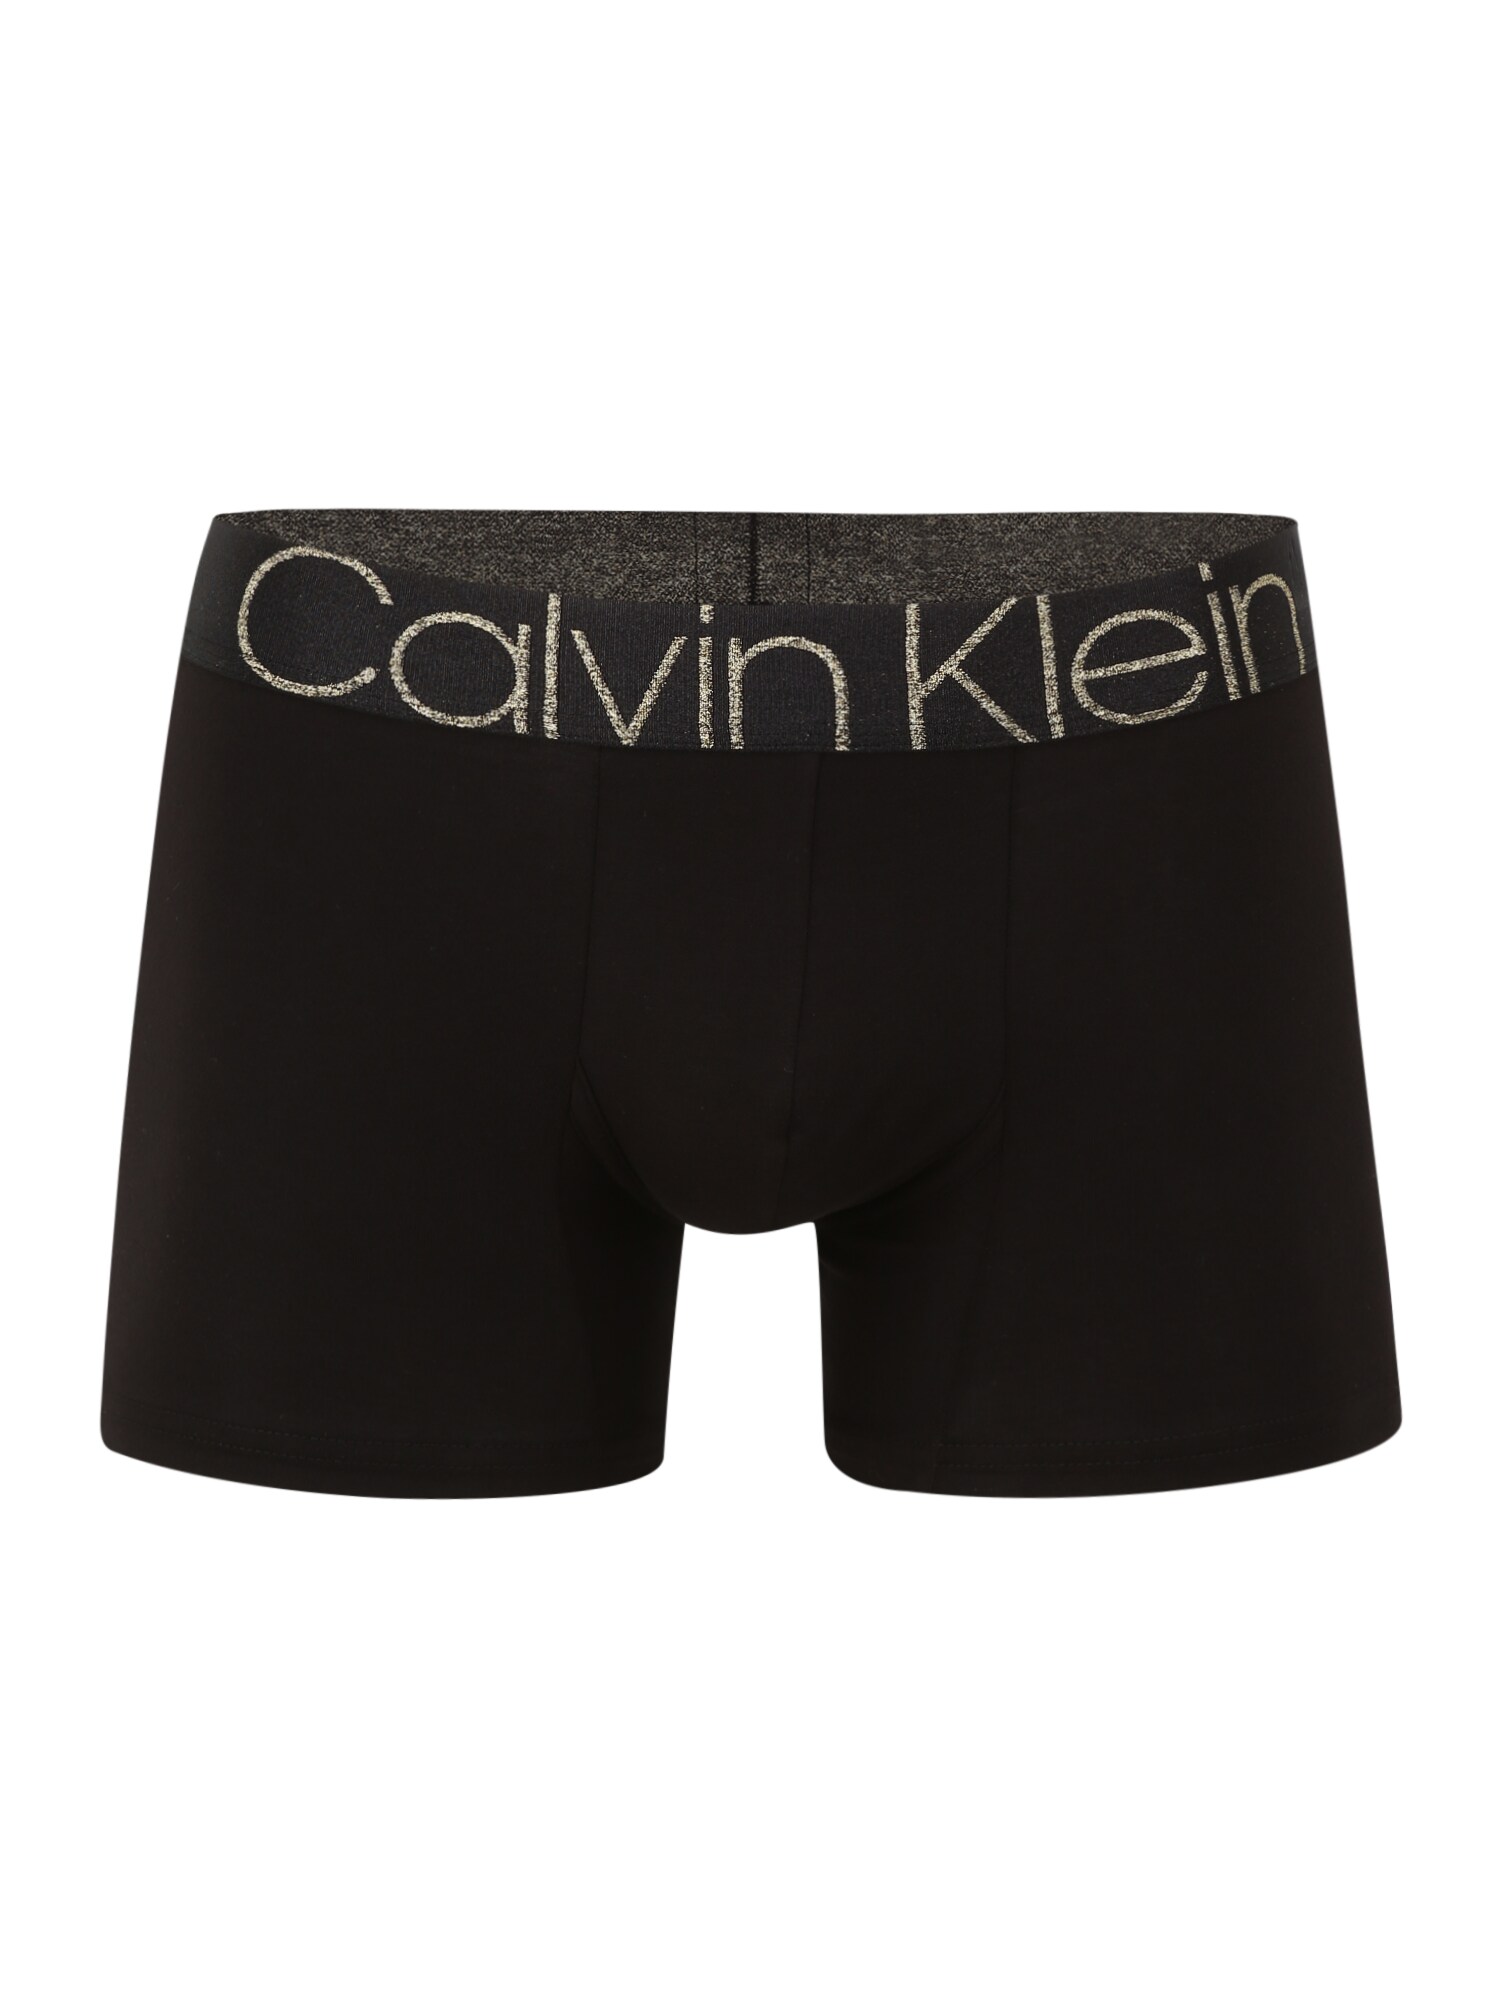 Calvin Klein Underwear Boxer trumpikės  juoda / tamsiai pilka / glaisto spalva